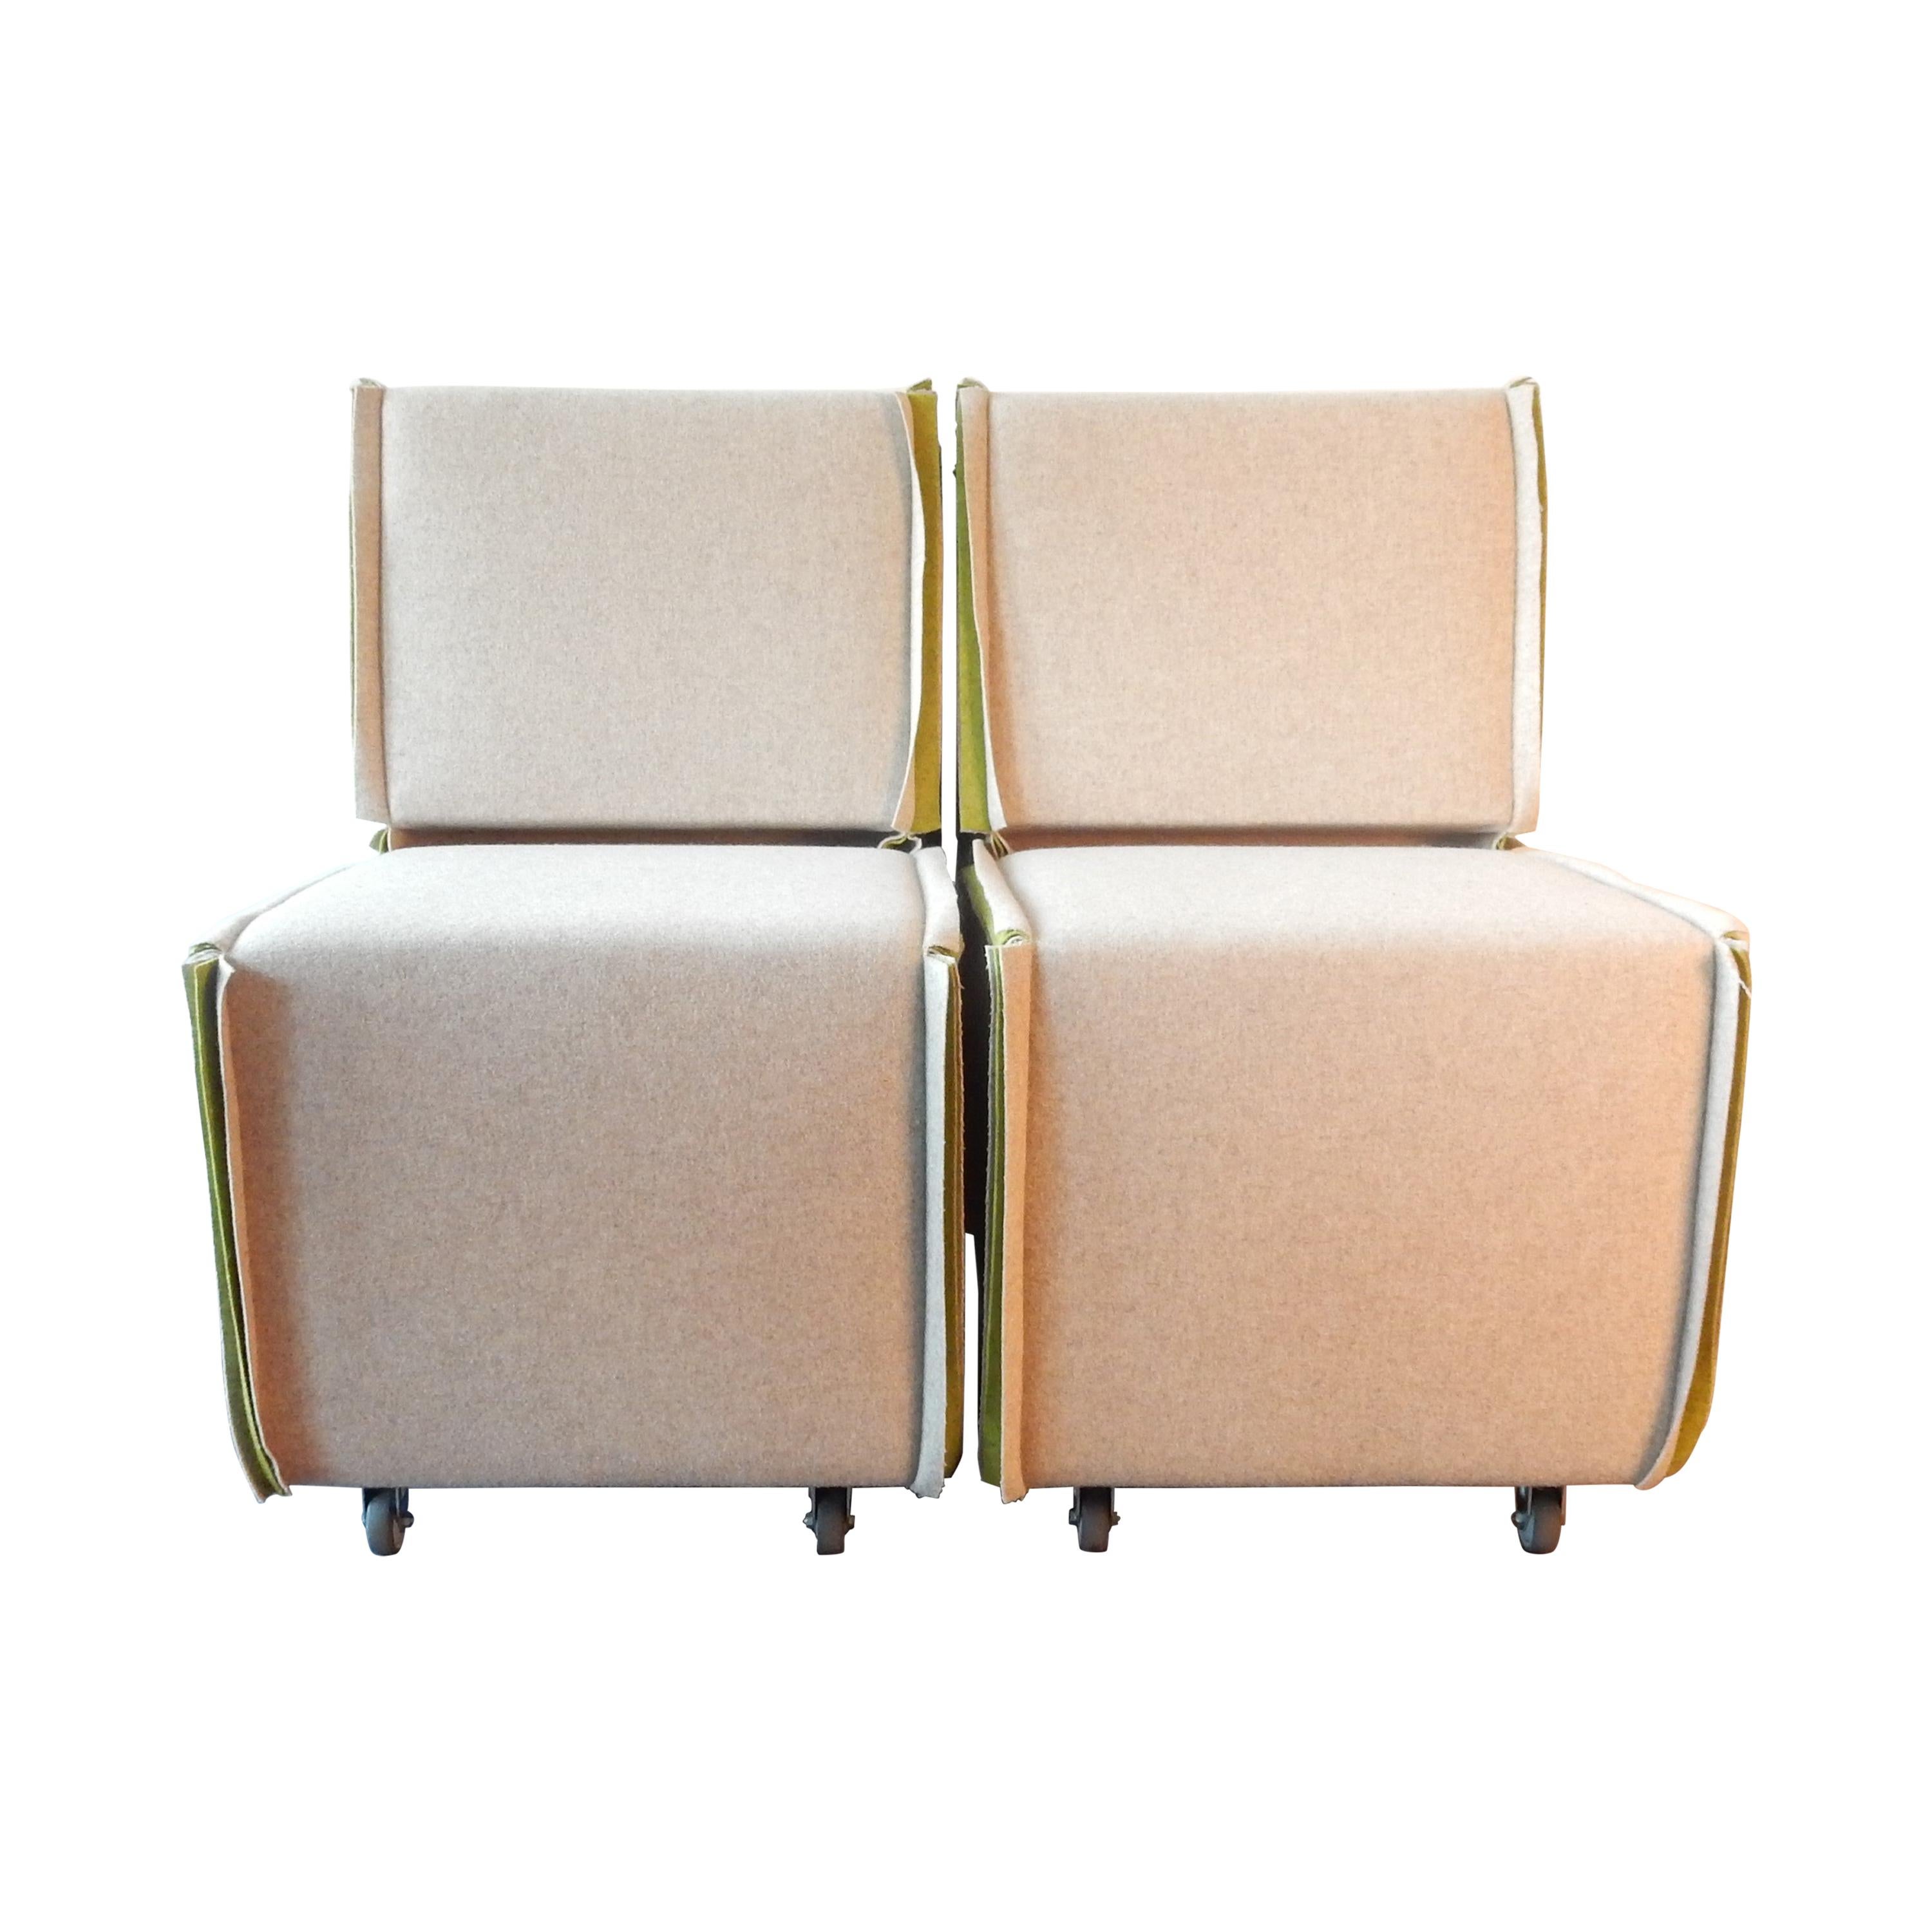 Set of 2 Felt Designer Chairs on Wheels by Merkx+Girod, the Netherlands, 2003 For Sale